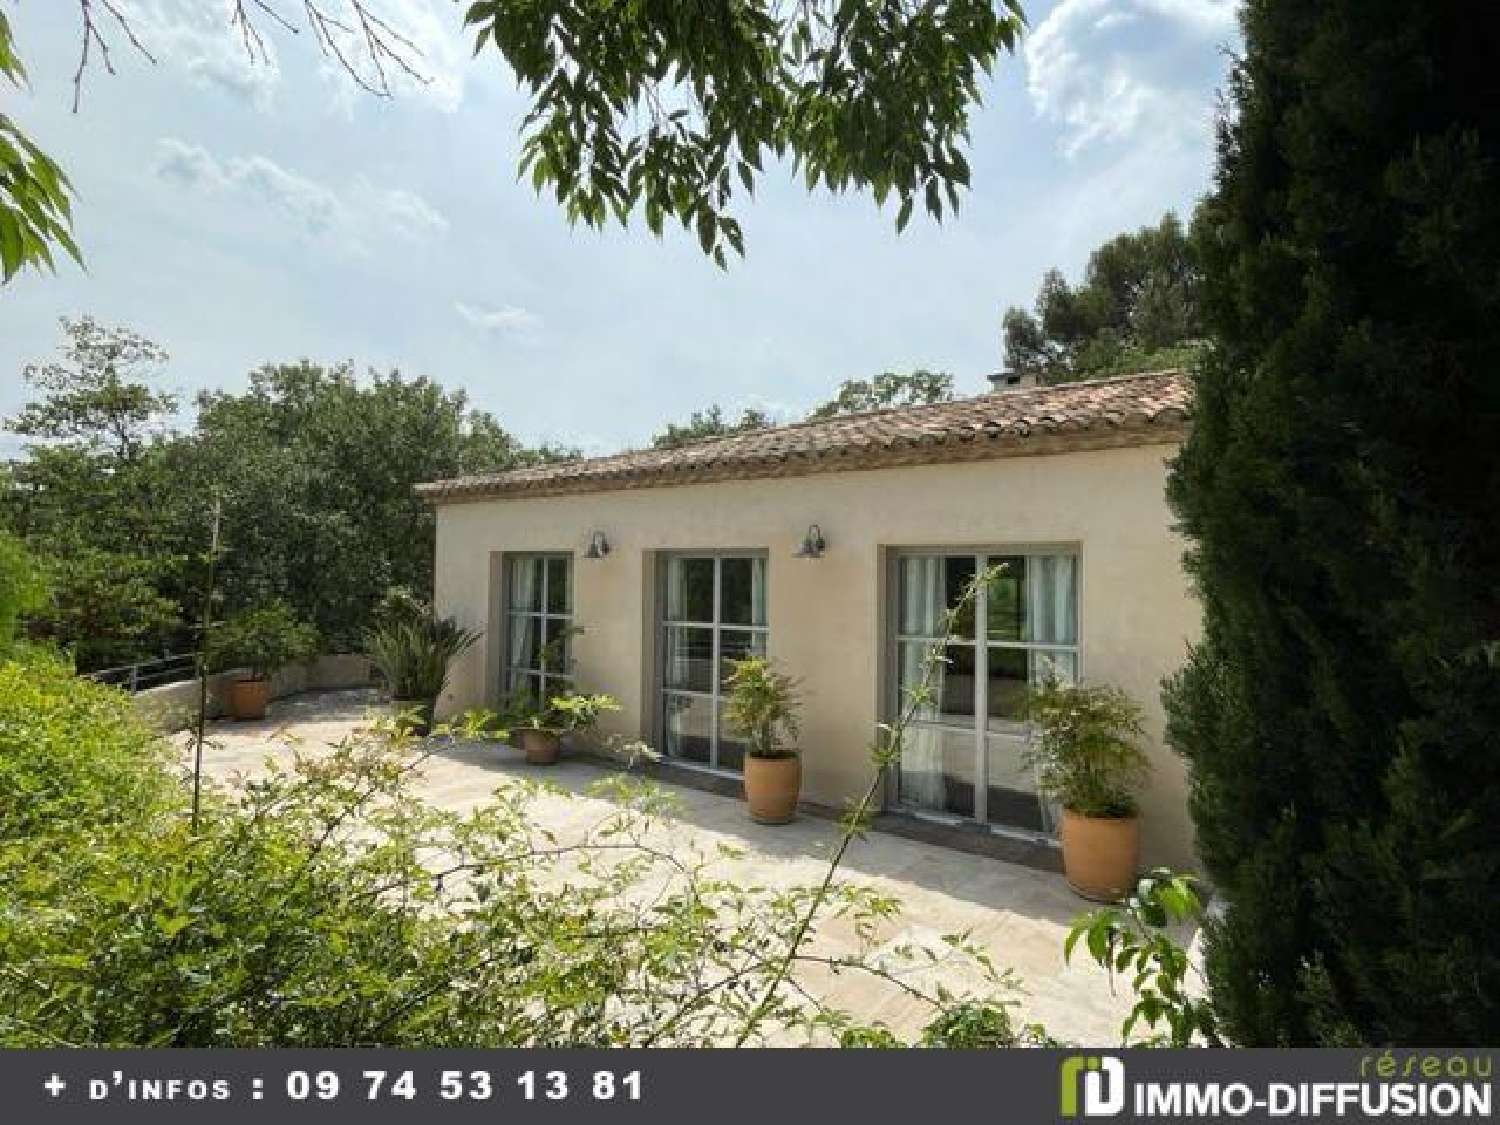  à vendre maison Nîmes Gard 2